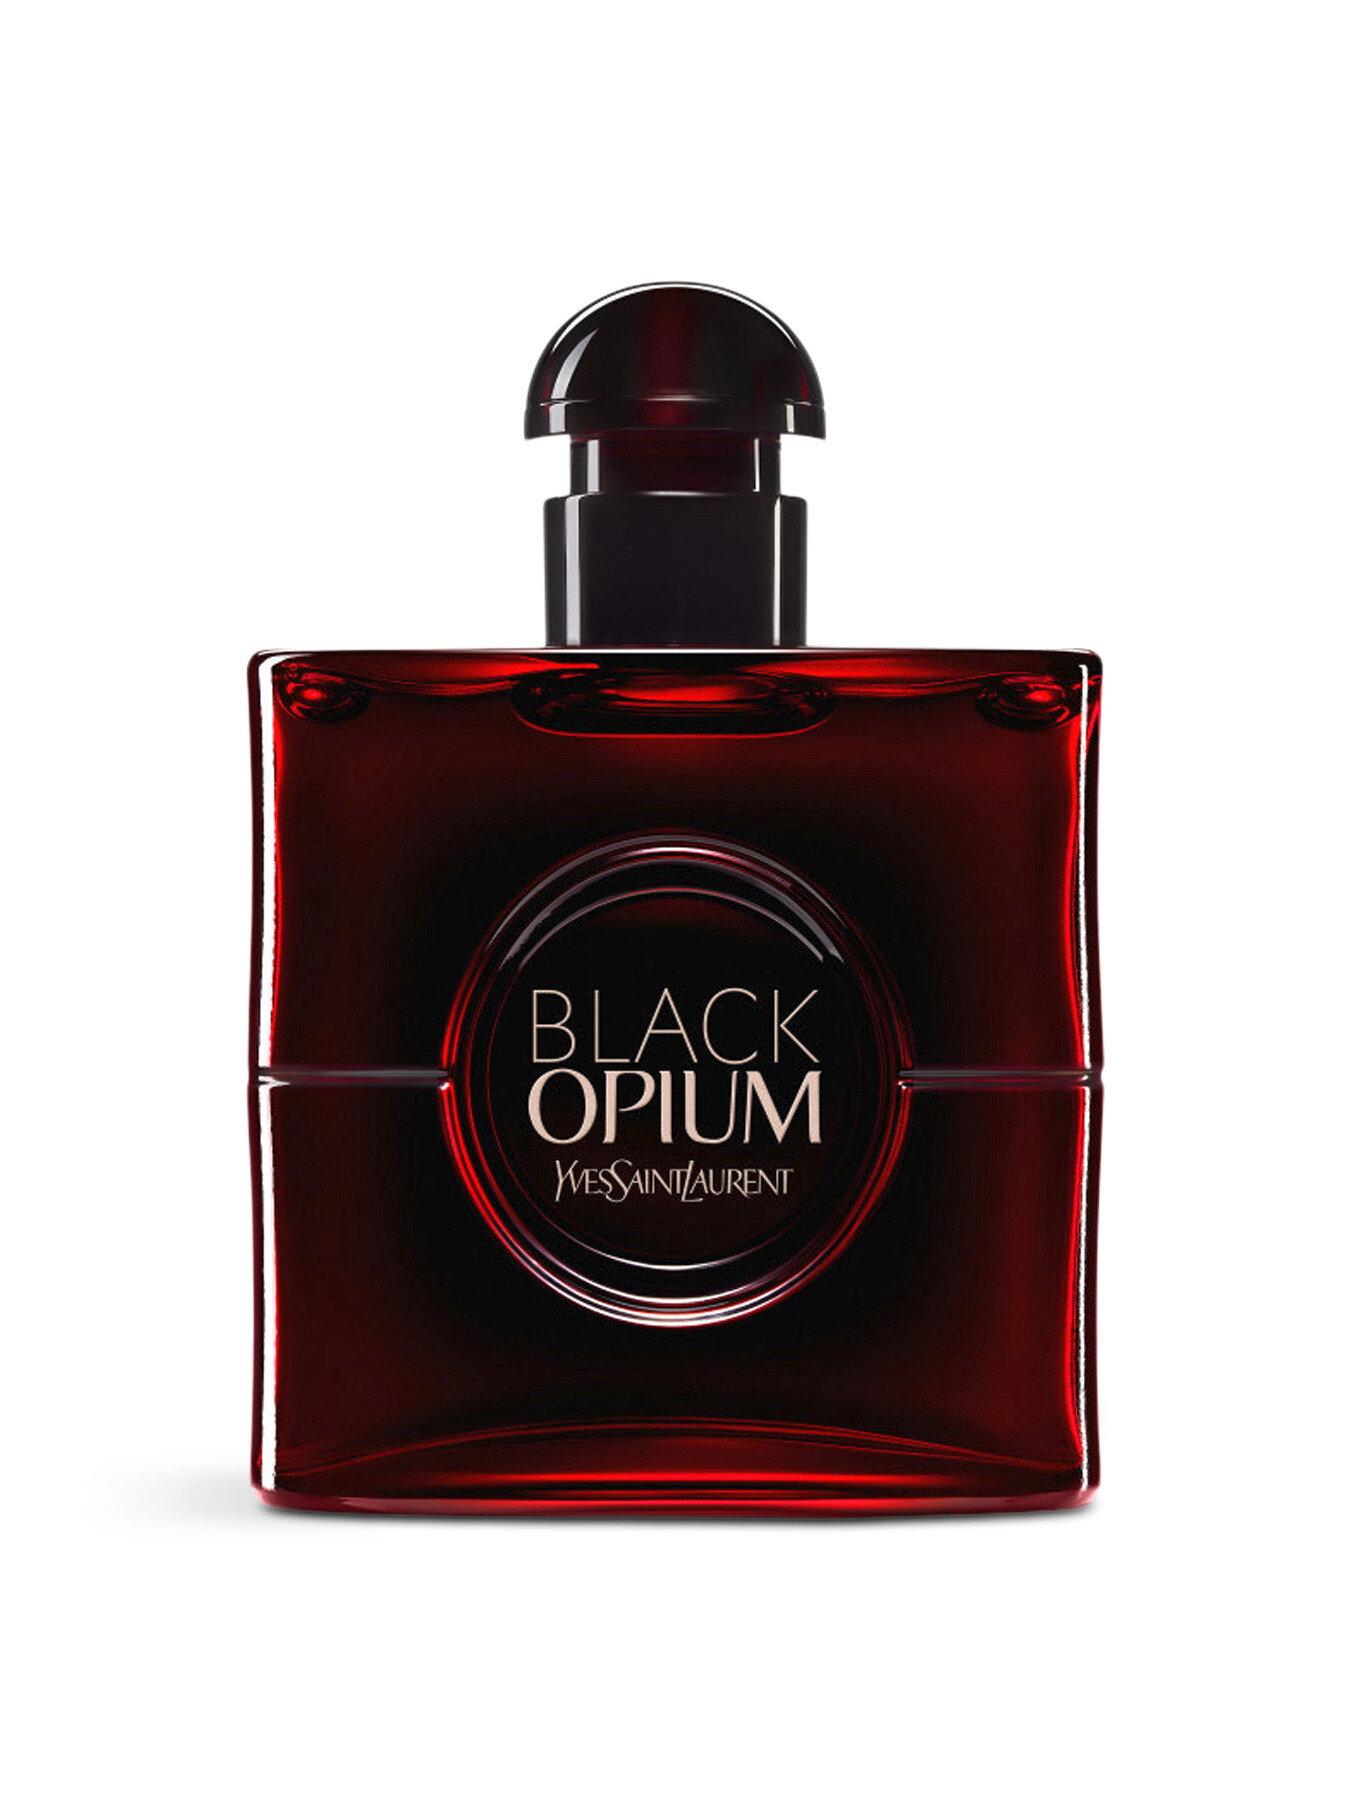 Ysl Black Opium Over Red Eau De Parfum 50ml In White